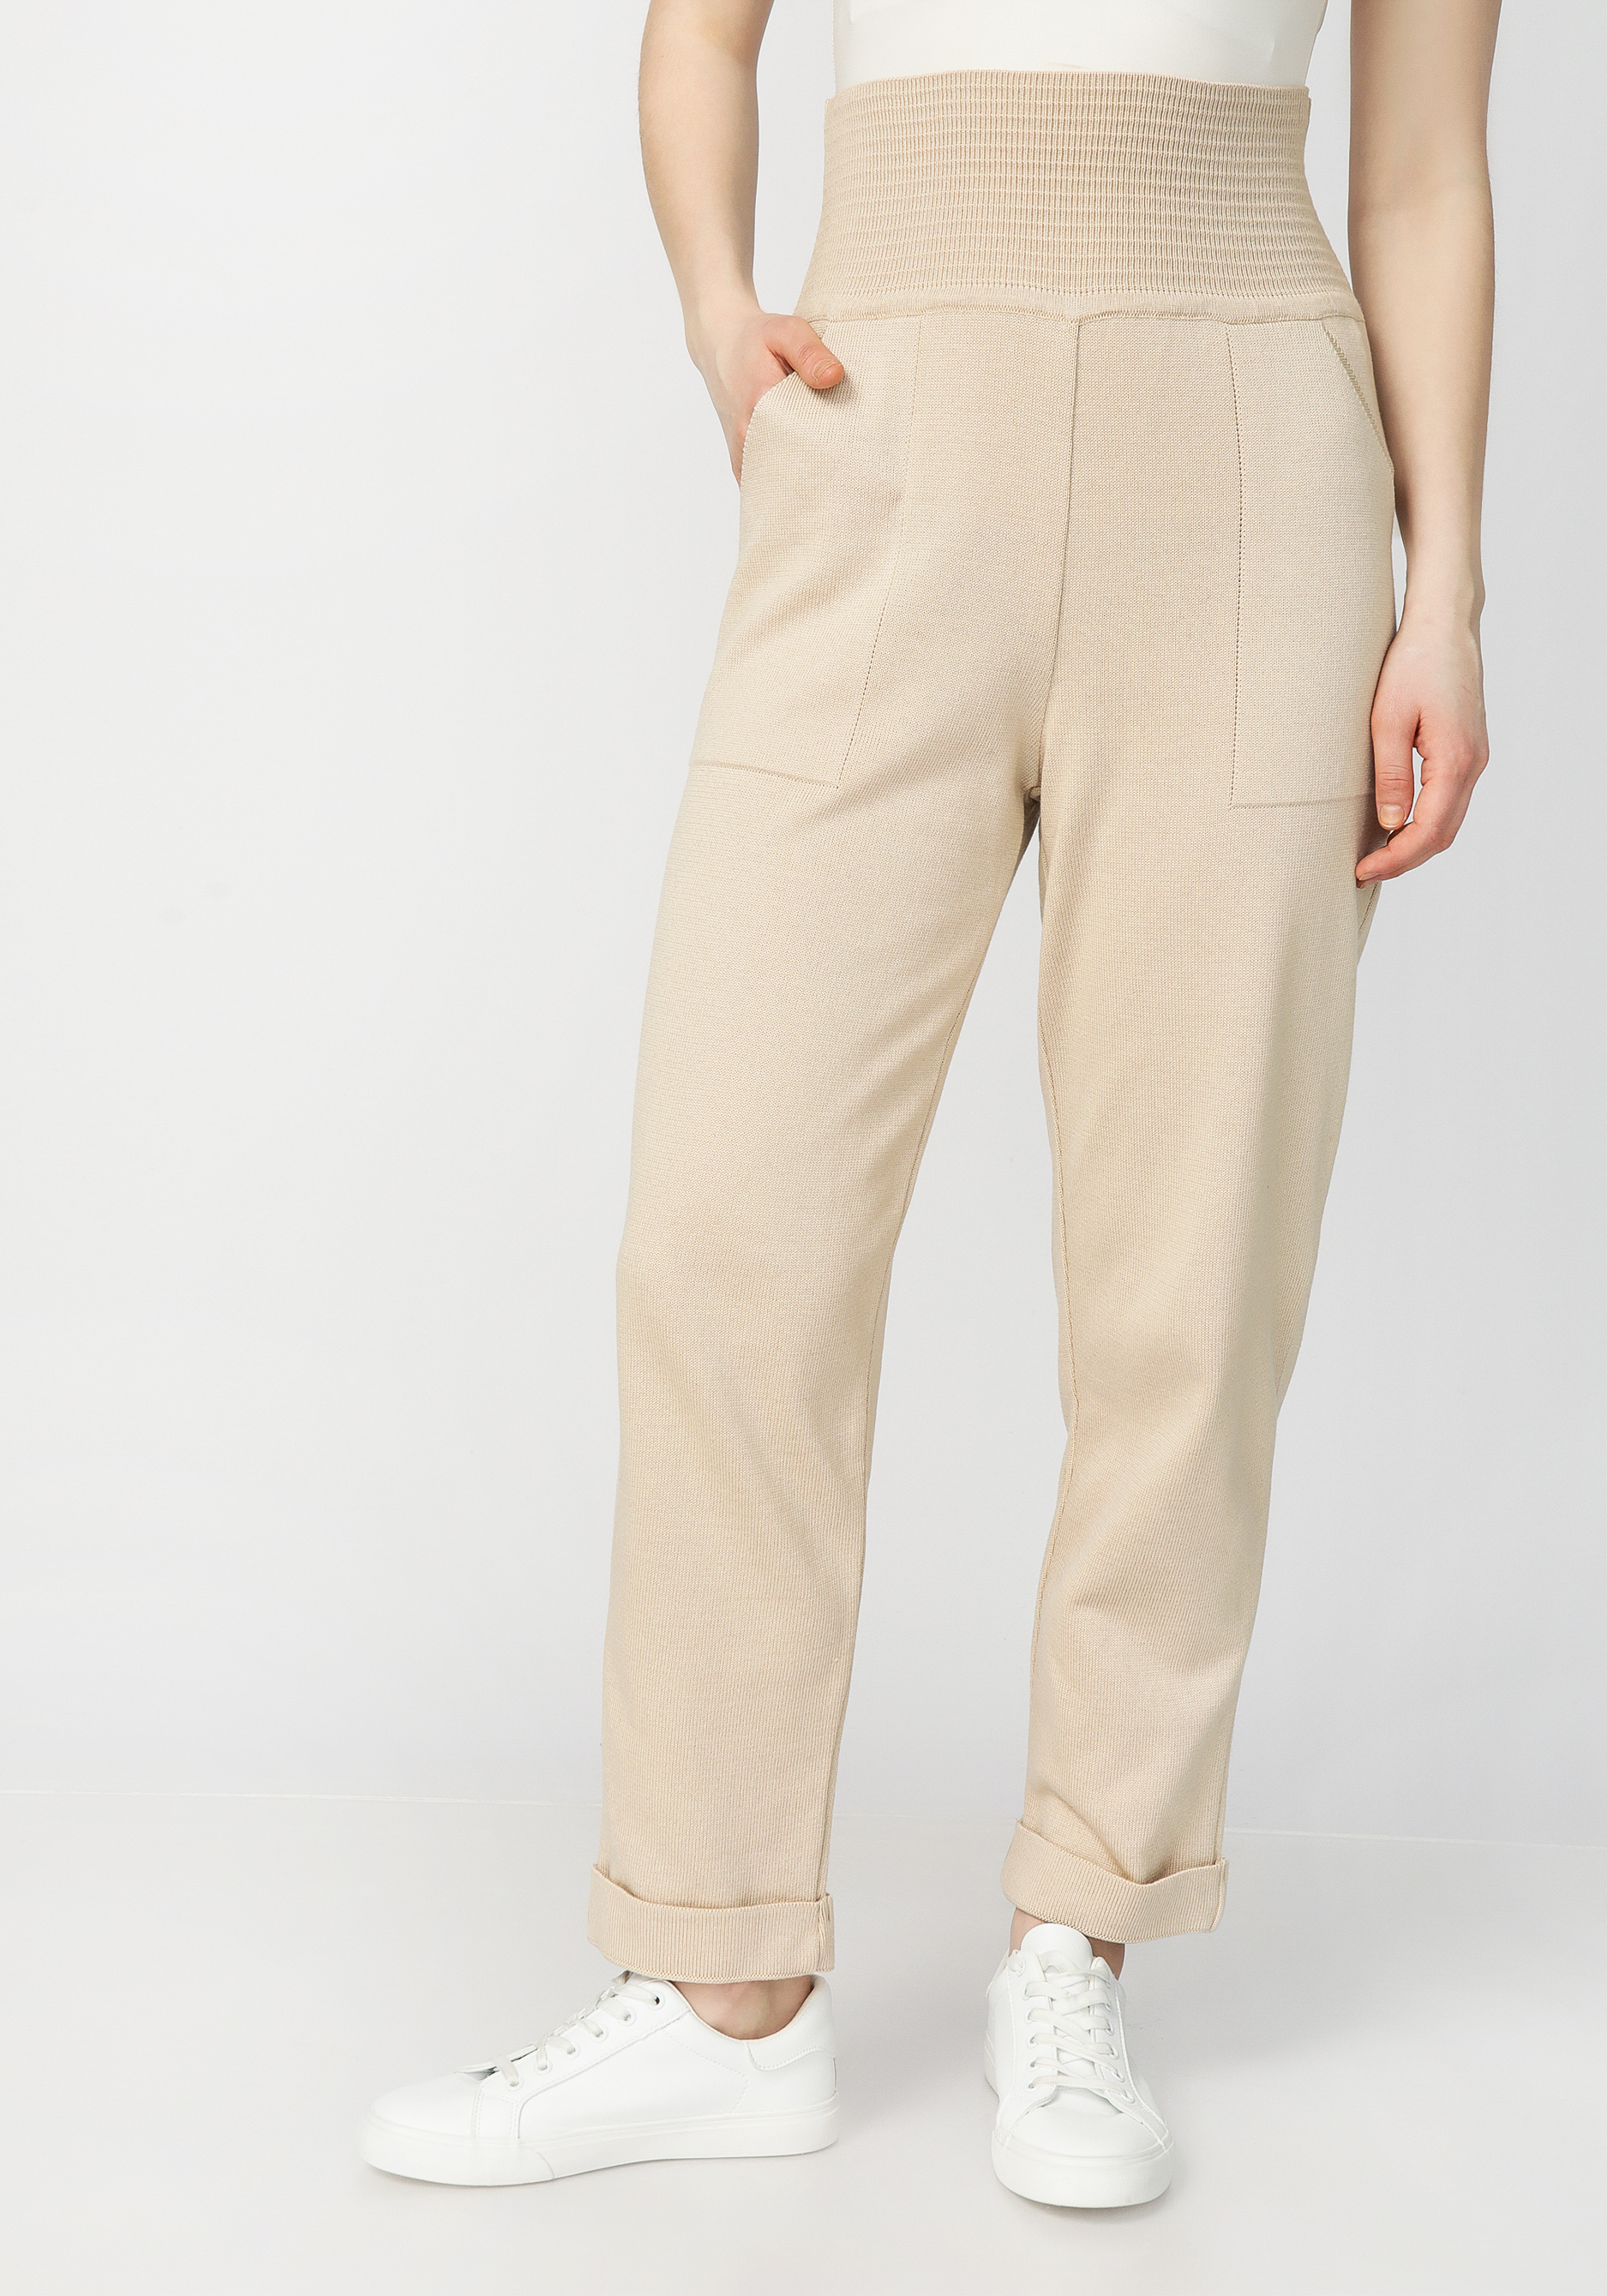 Брюки на широкой эластичной резинке жен брюки муслин серый р 60